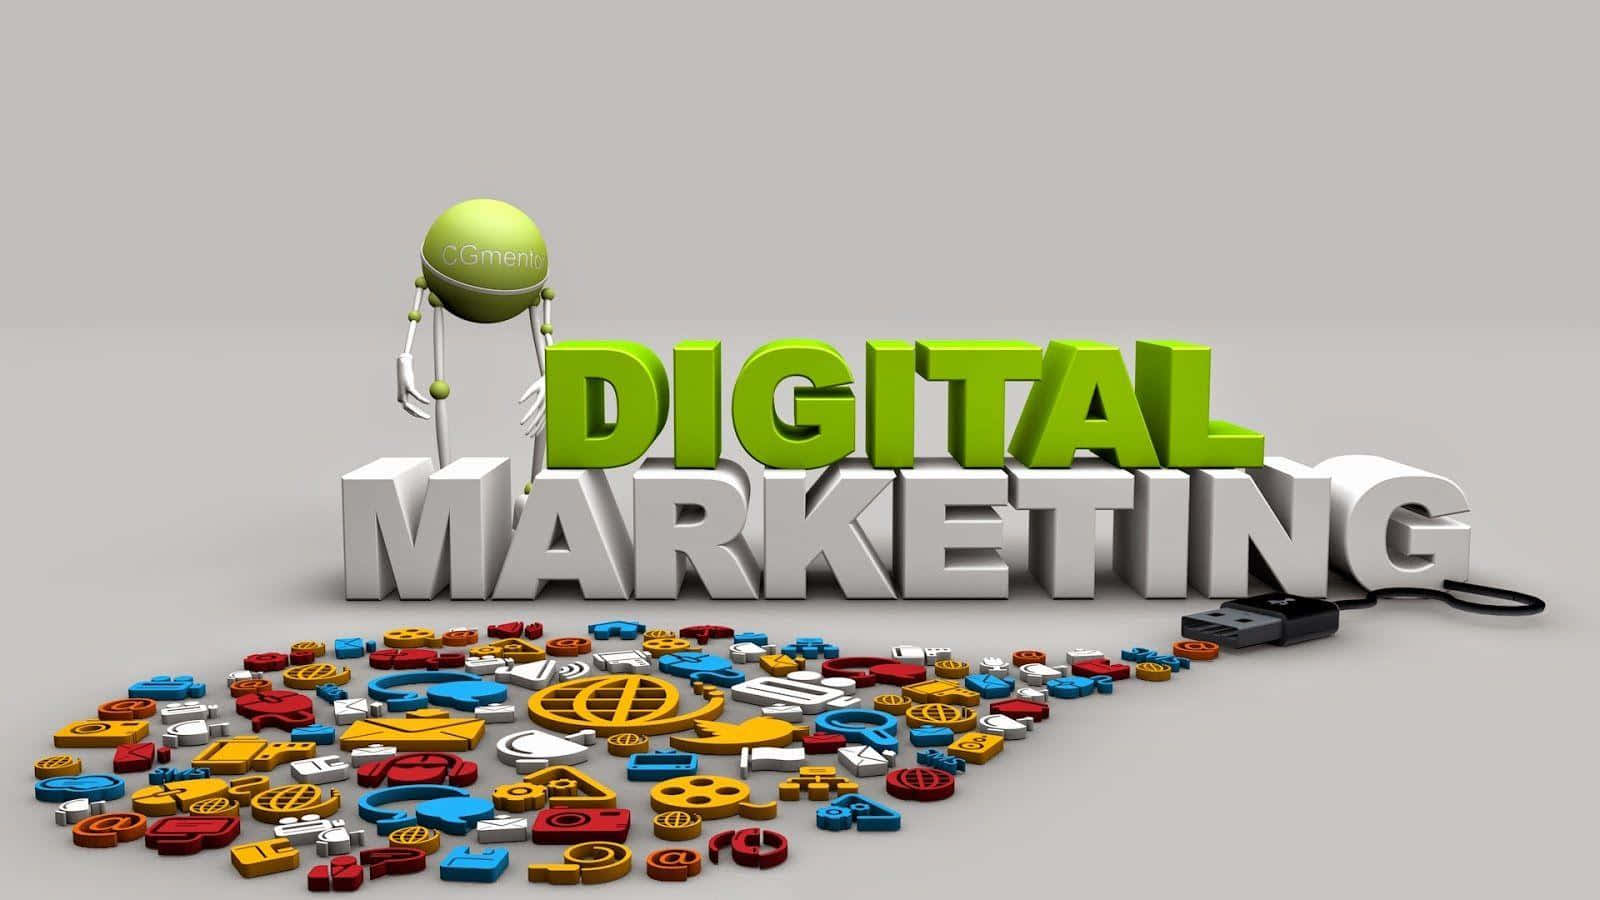 Digital Marketing Pictures